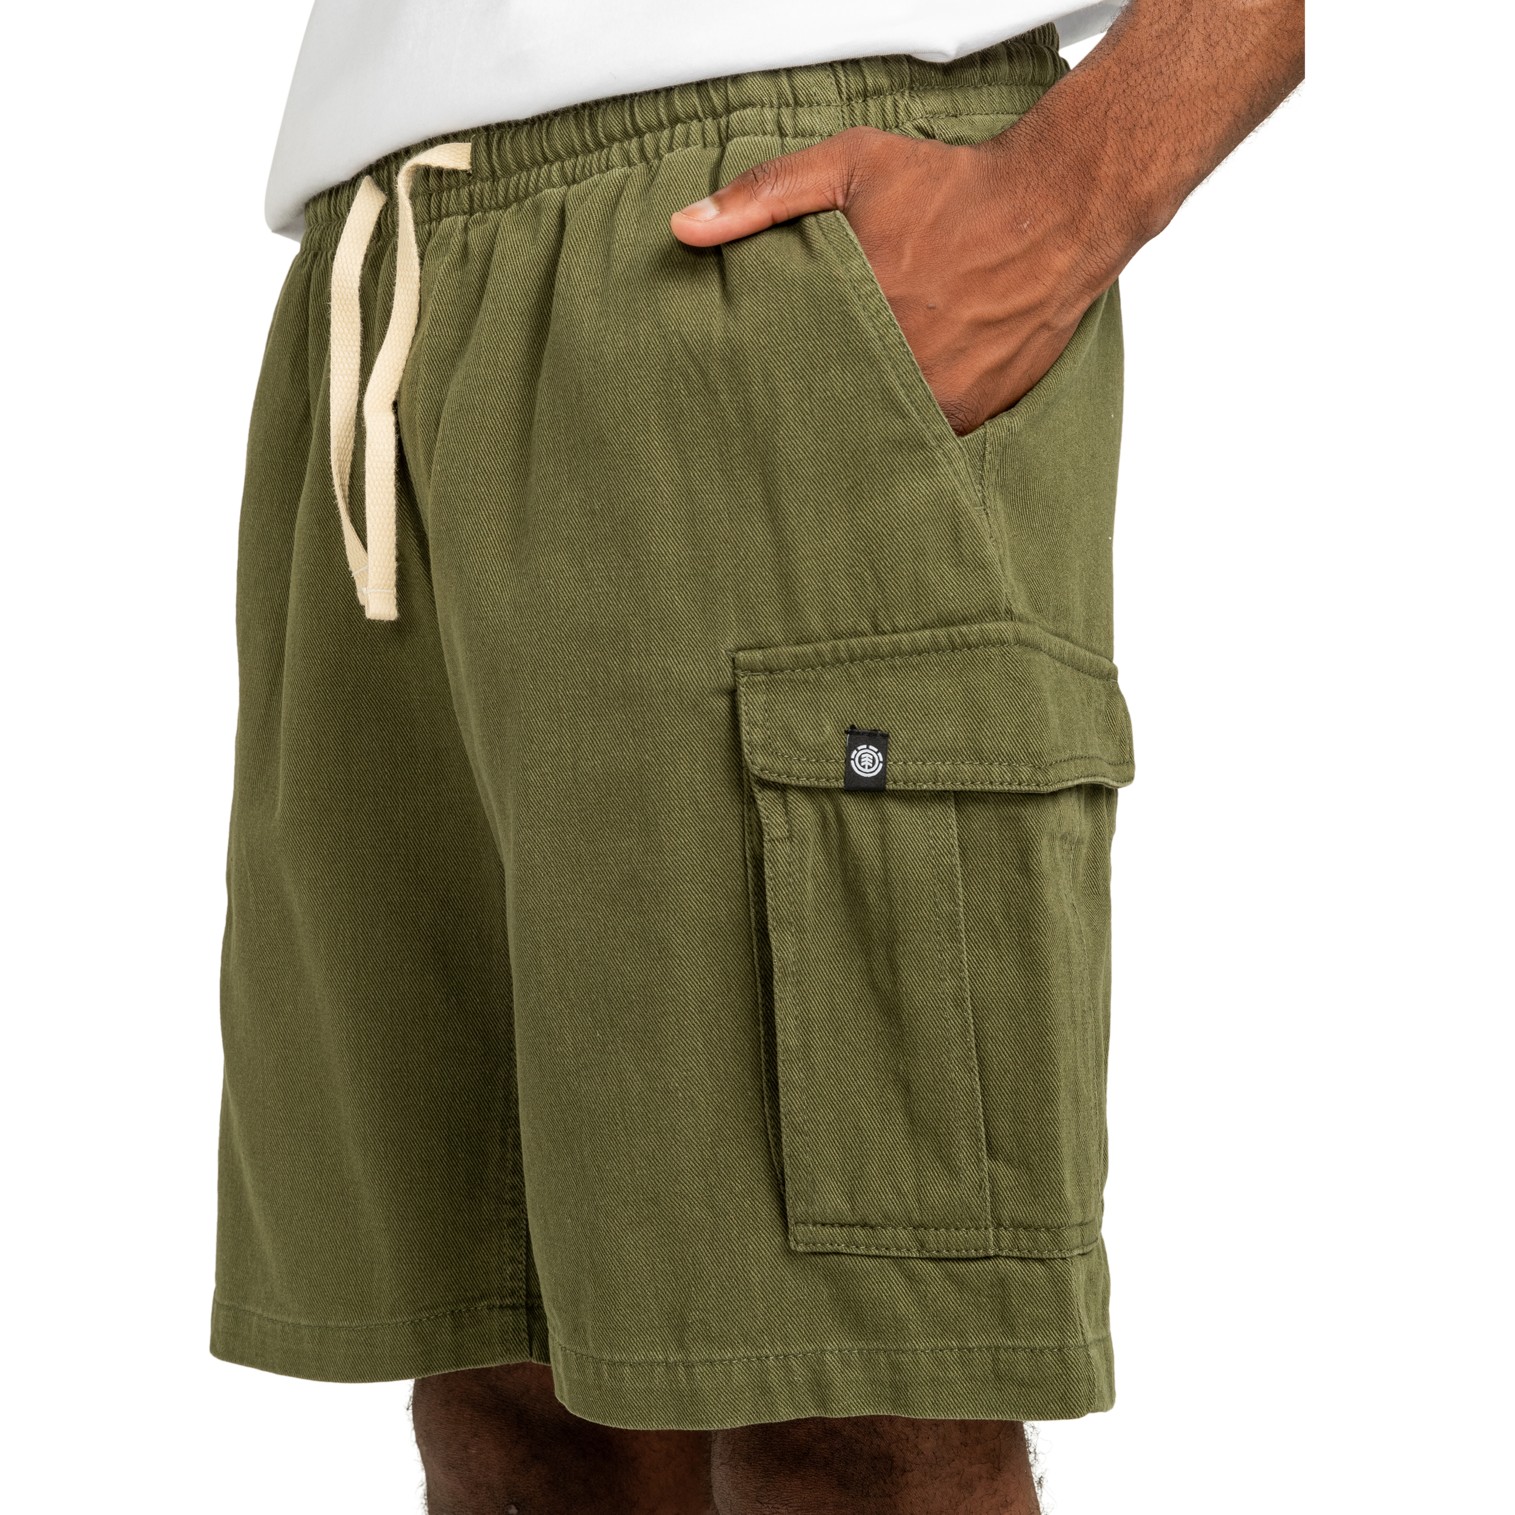 Productfoto van Element Utility Cargo Shorts - rifle green